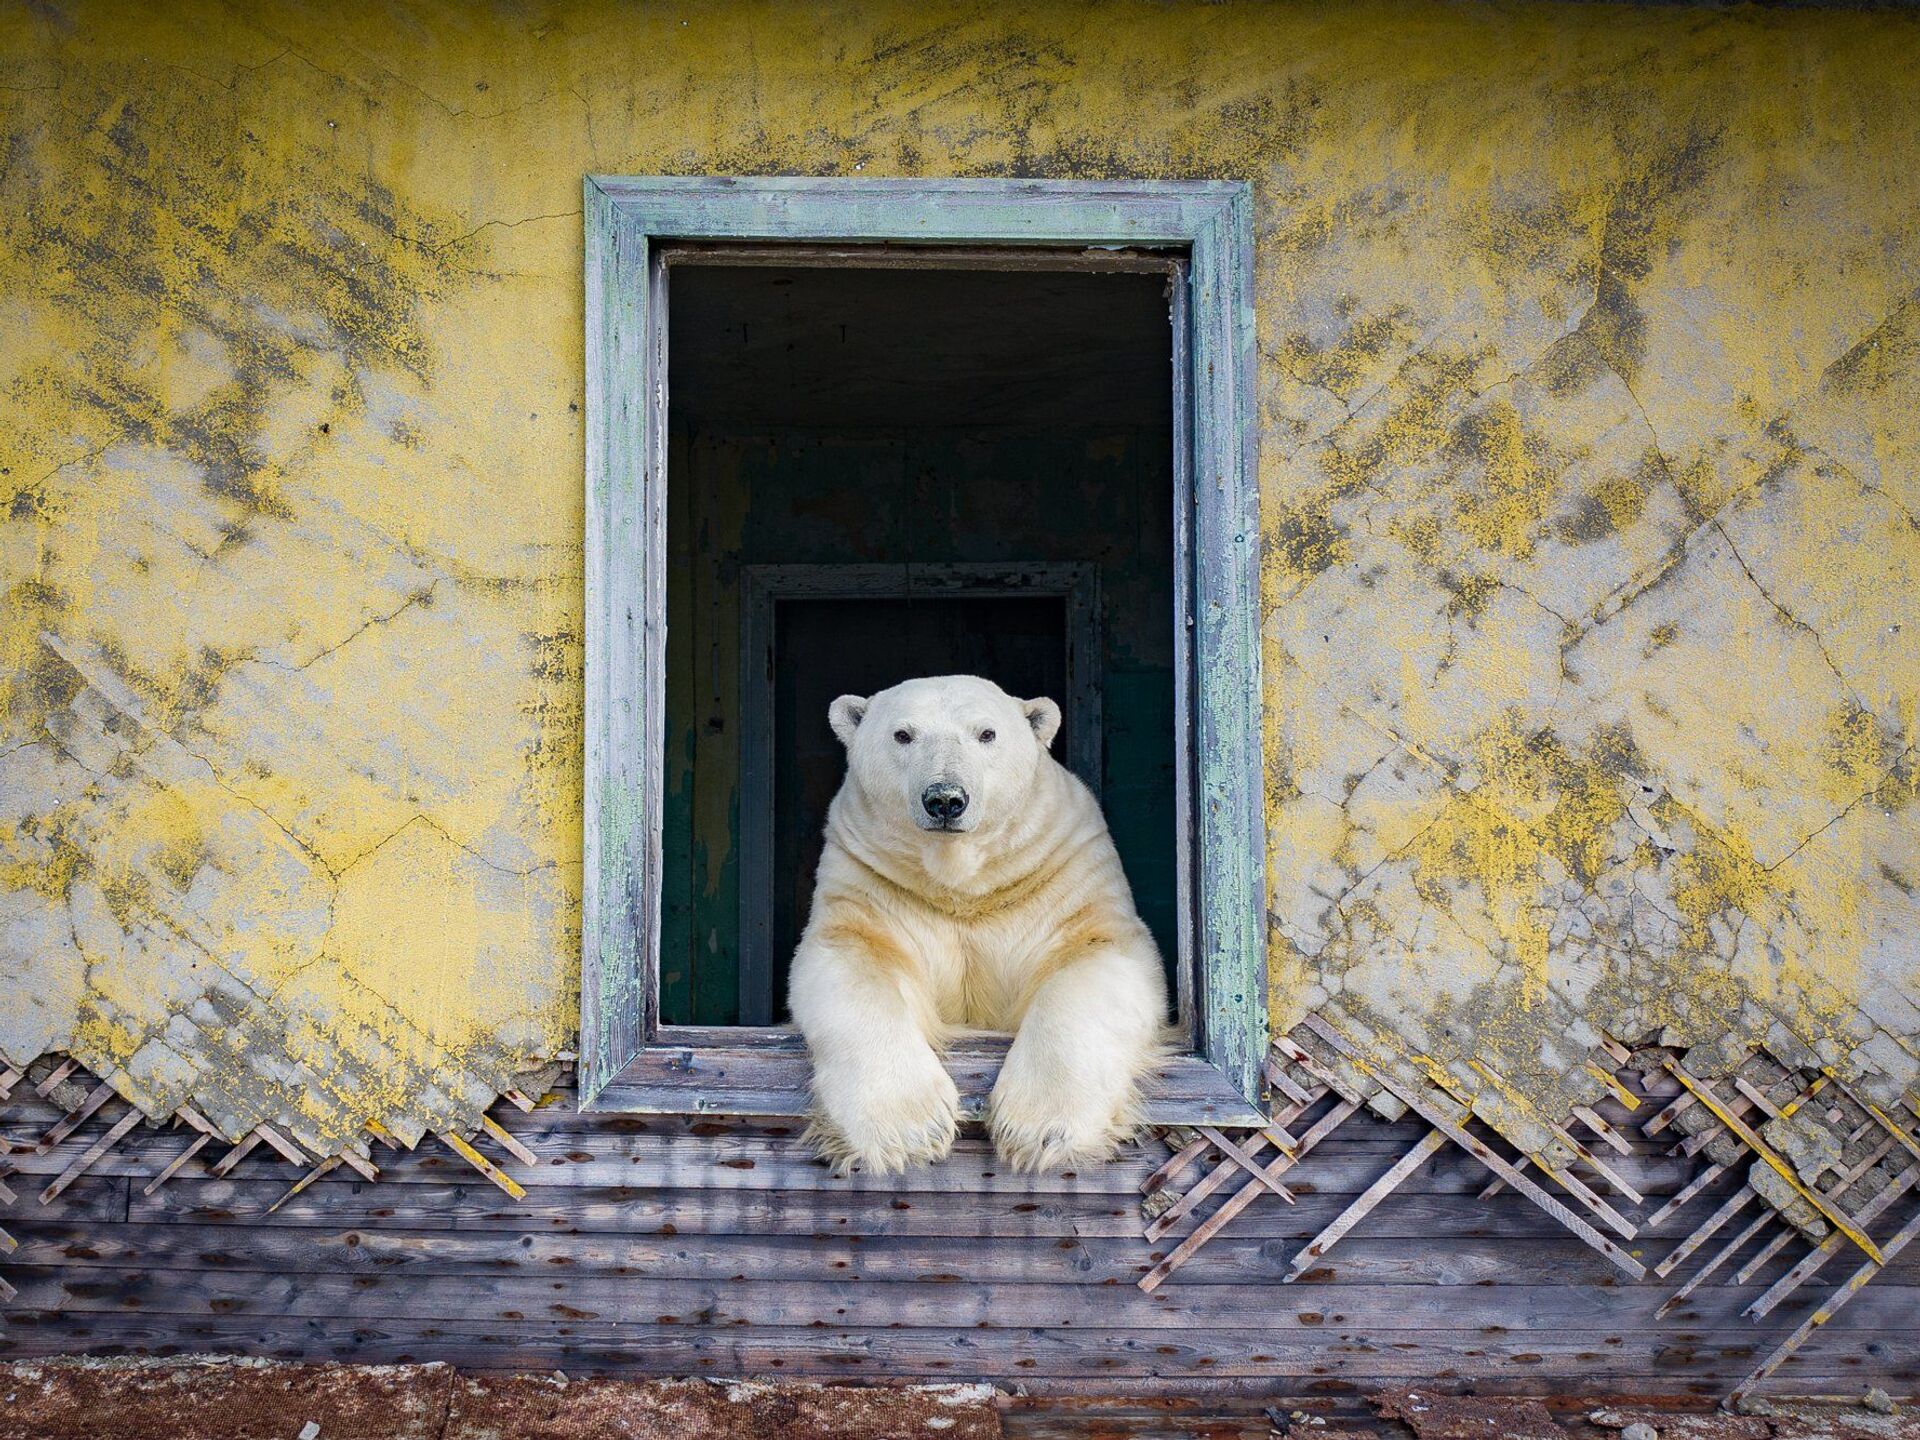 Дома для туристов построят в заповеднике «Медвежьи острова» в Якутии